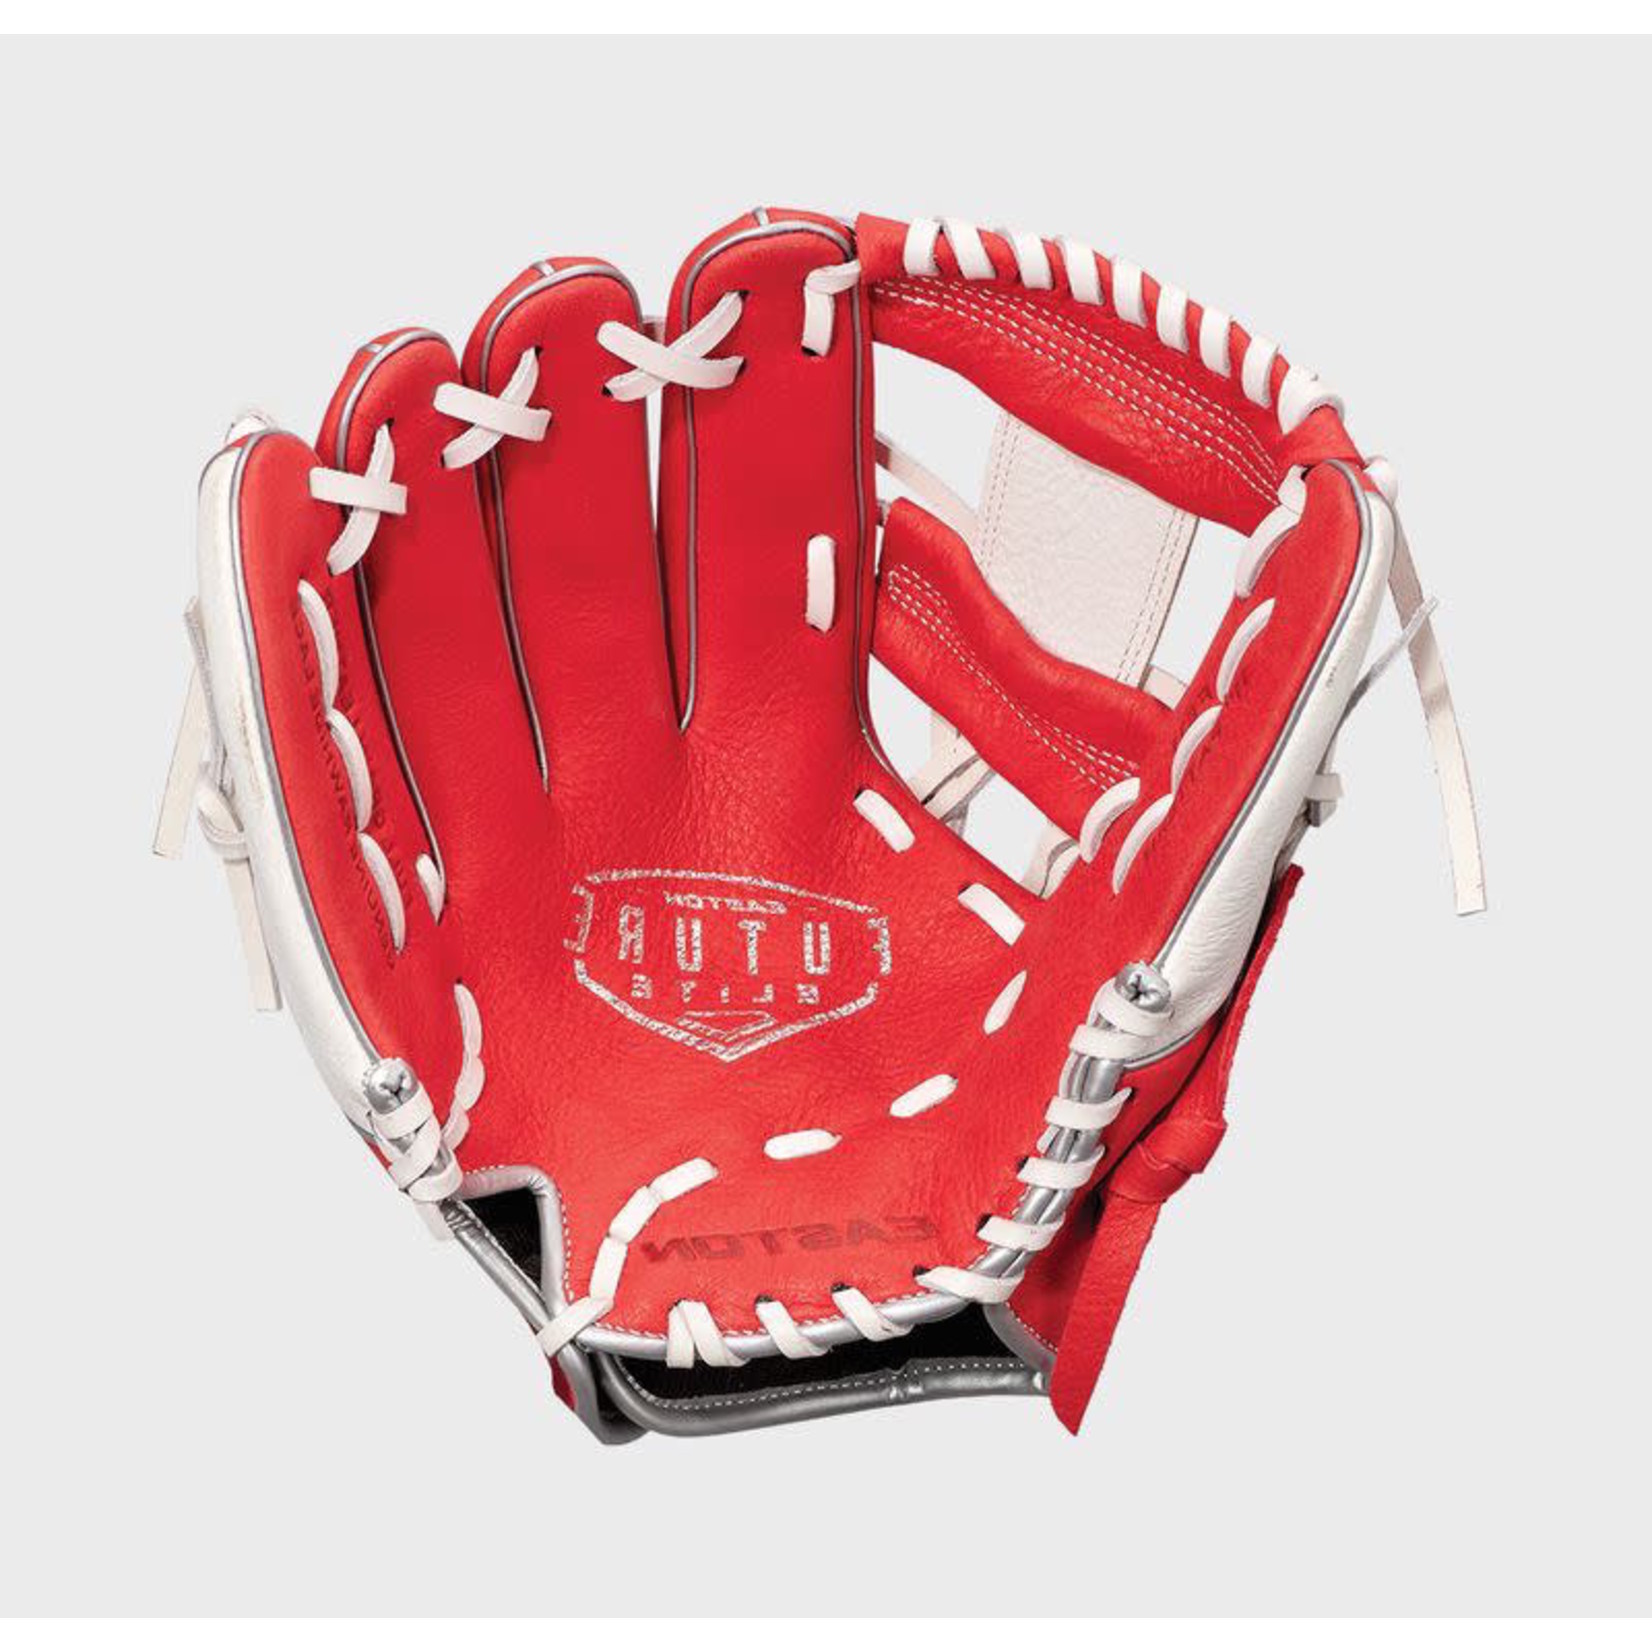 Easton Easton Baseball Glove, Future Elite Series, FE11, 11" Youth Pattern, Red/Wht, Full Right